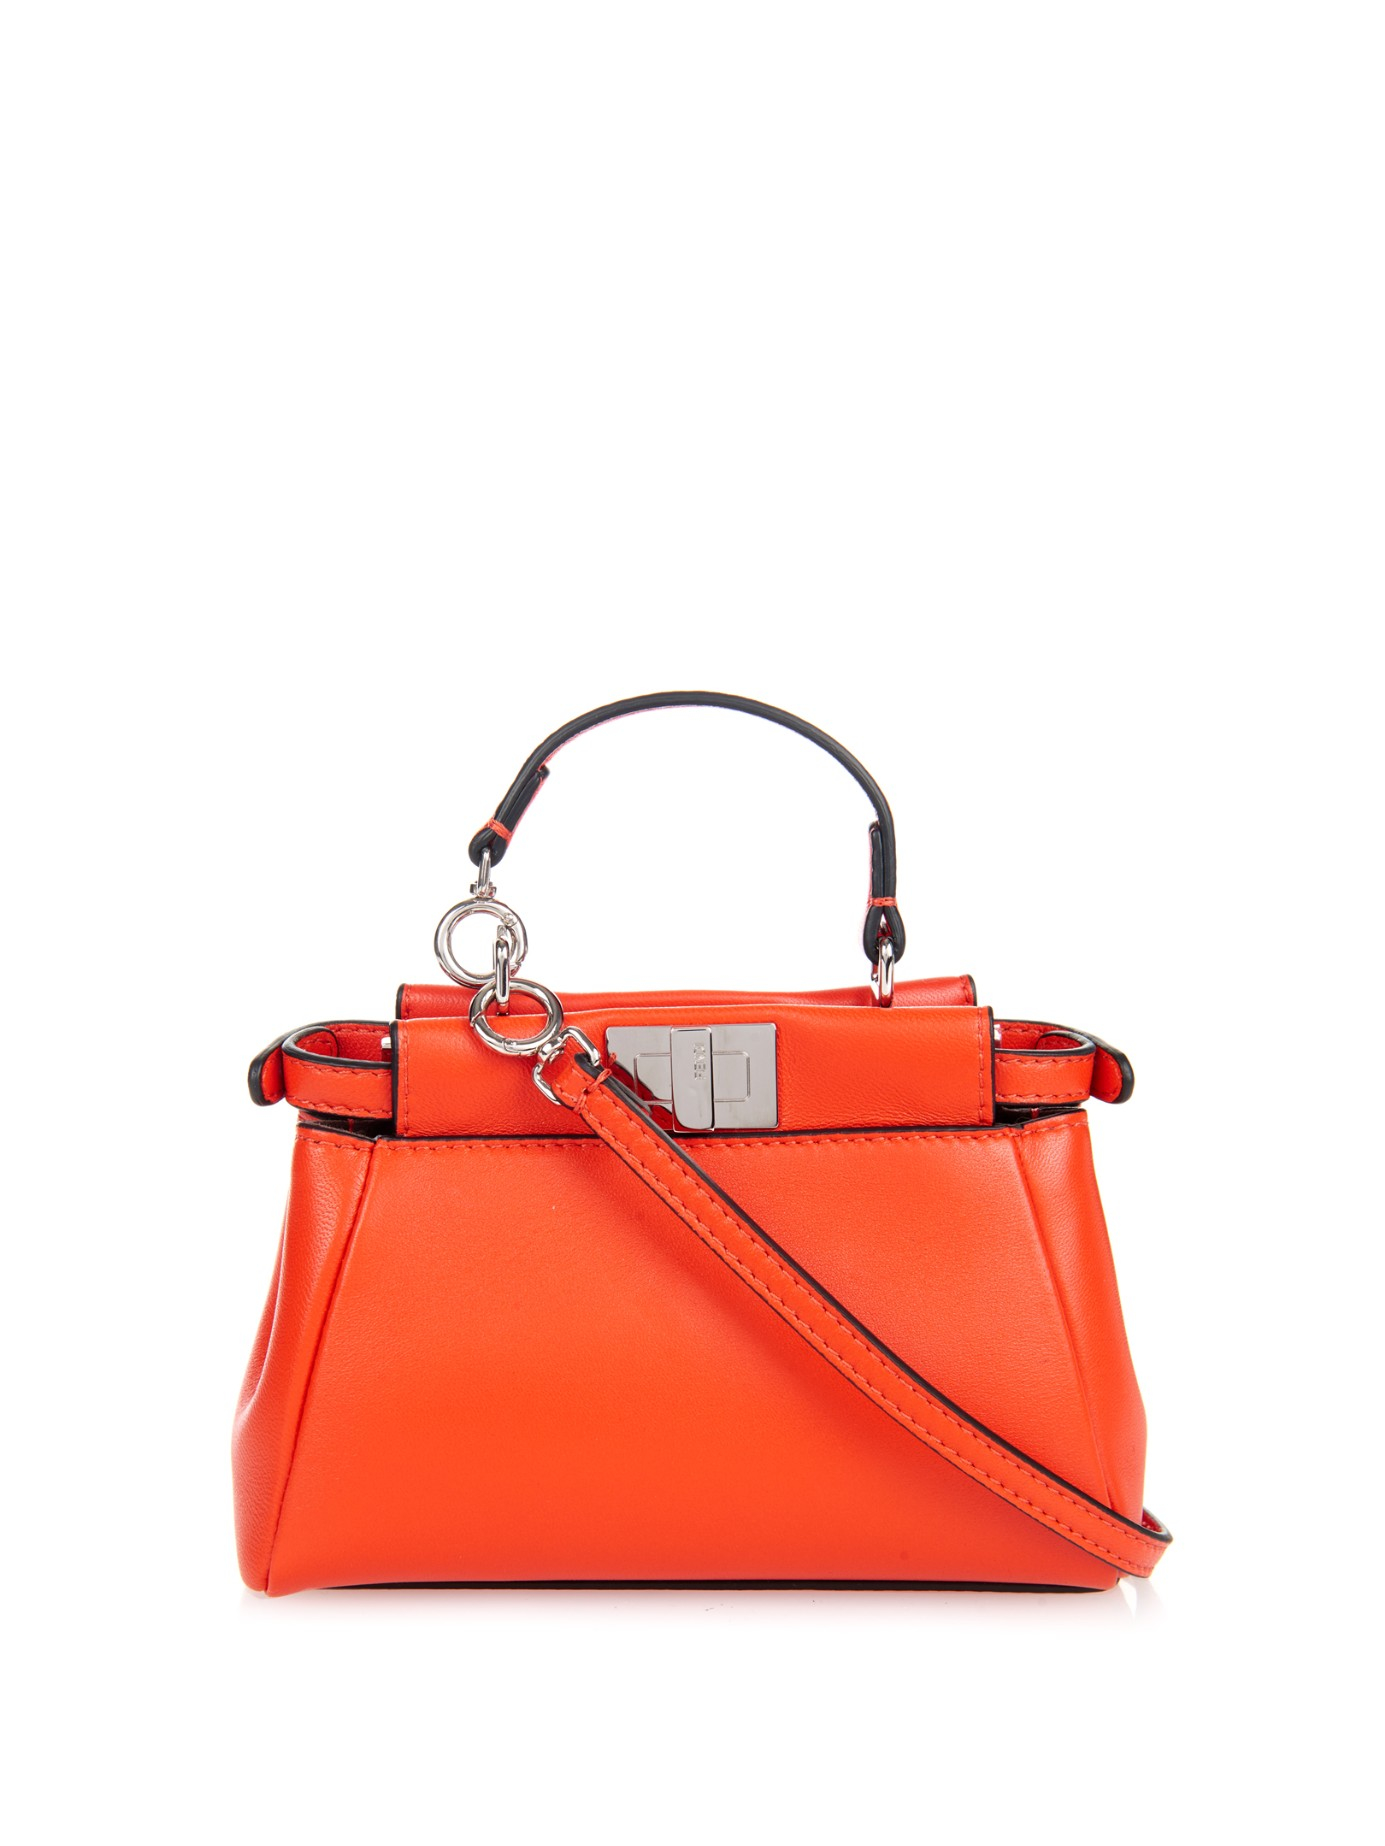 Lyst - Fendi Micro Peekaboo Leather Cross-Body Bag in Orange